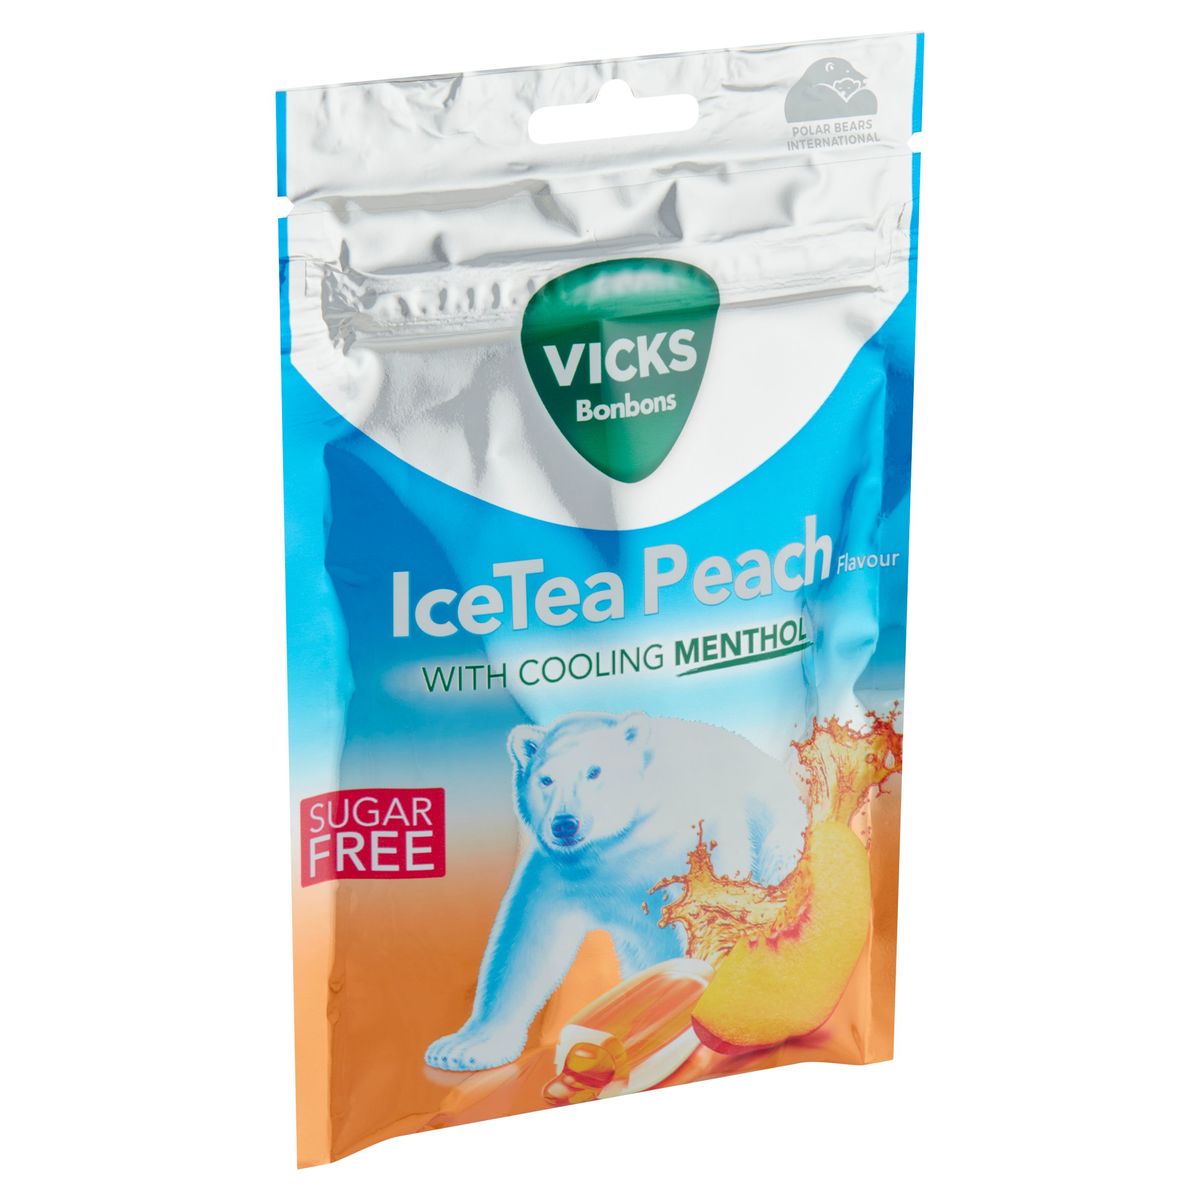 Vicks Bonbons IceTea Peach Flavour with Cooling Menthol 72 g